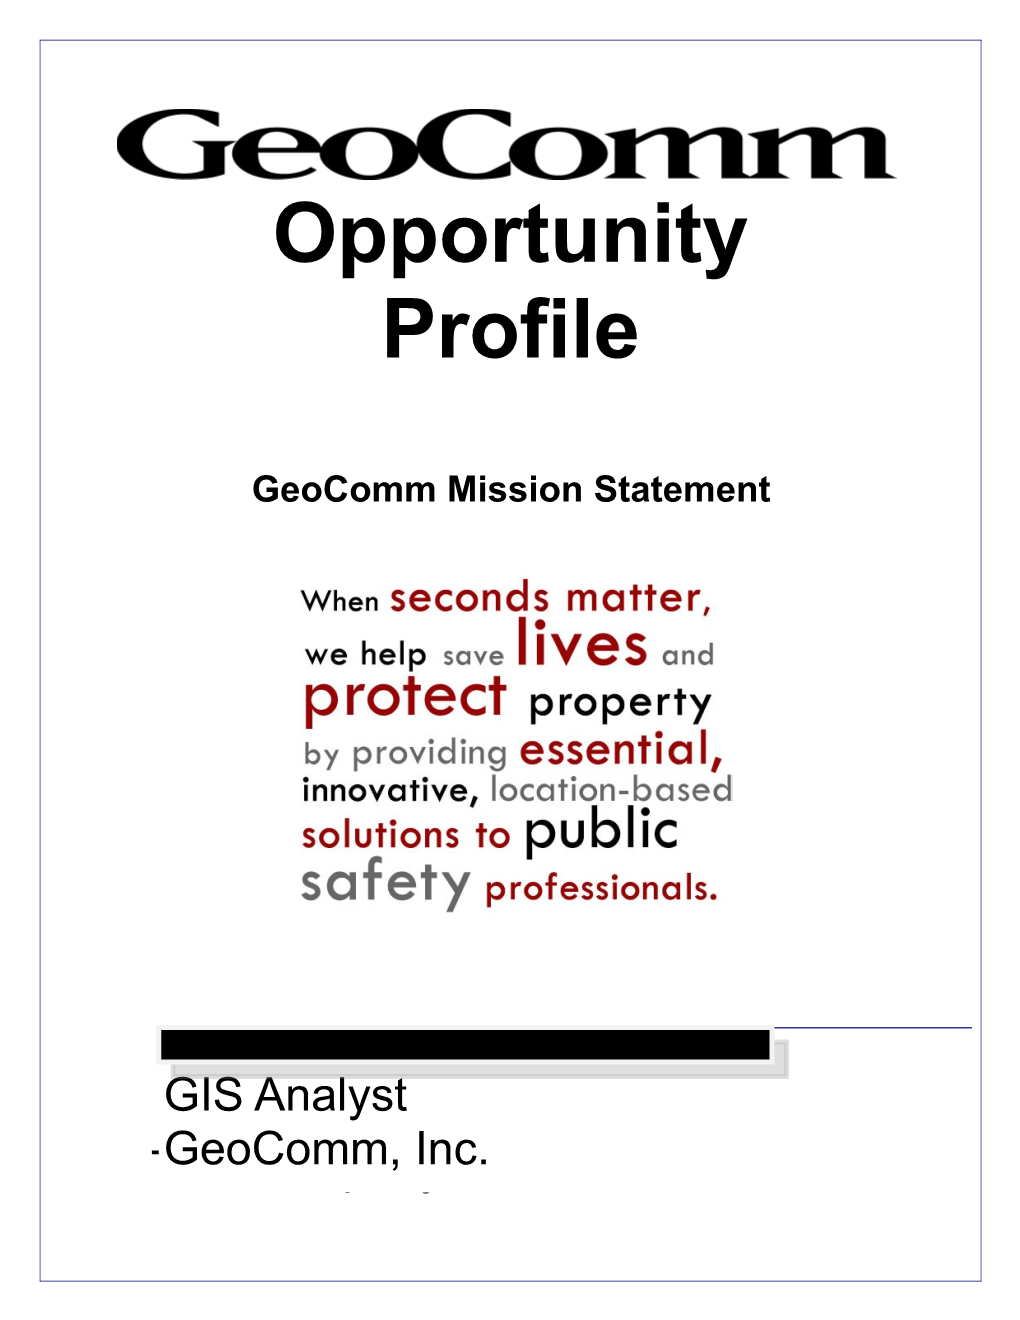 Geocomm Mission Statement